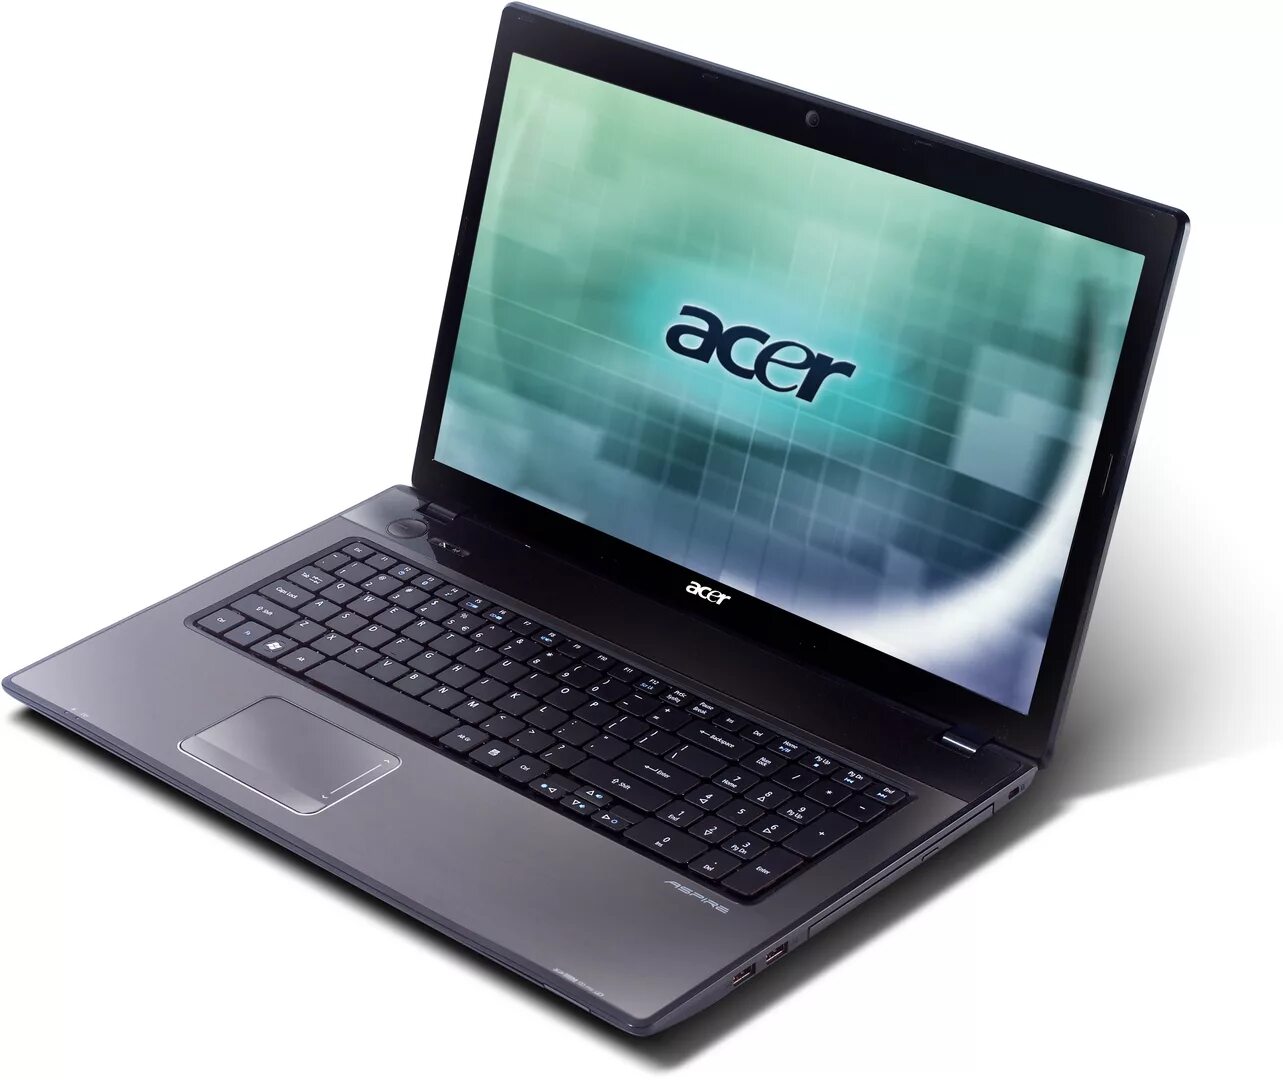 Памяти ноутбук acer. Ноутбук Acer Aspire 5750g. Acer Aspire 5336. Acer Aspire 7551g. Acer 5750g i5.